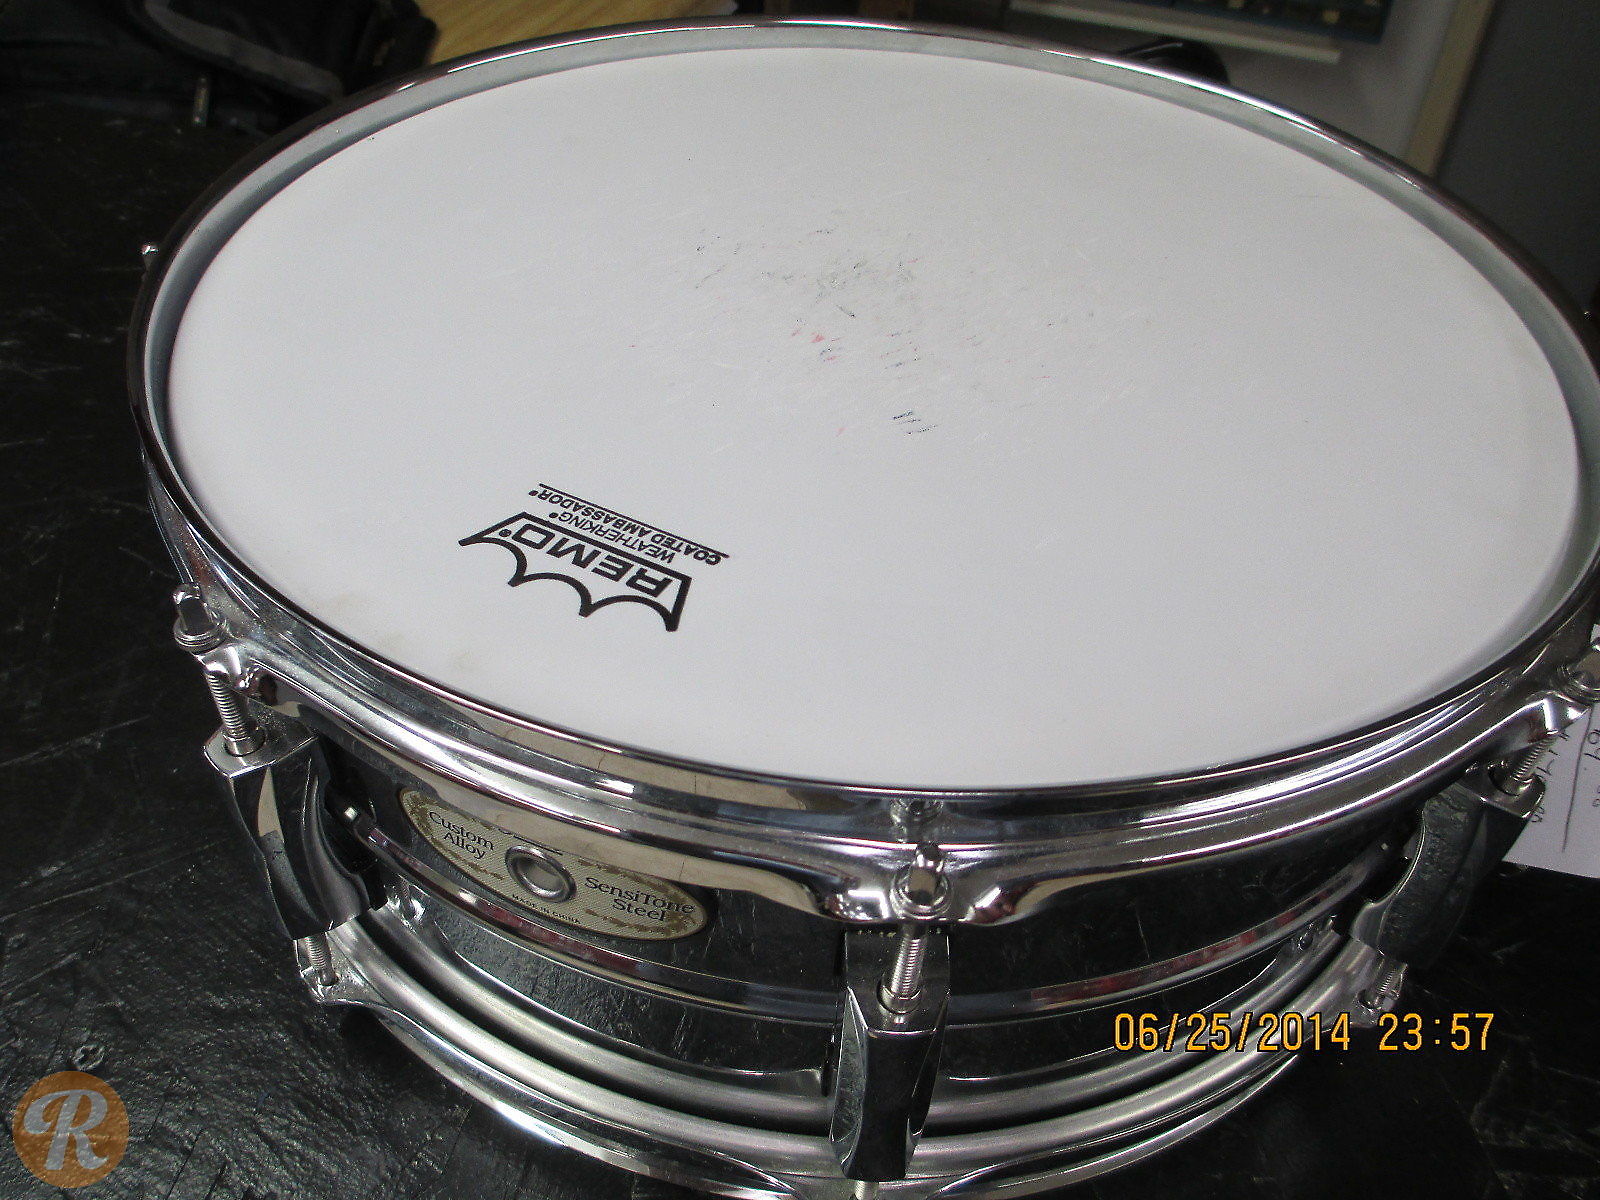 Caixa Pearl Sensitone 14X6,5 Steel - 100% Drum Shop, 100% Batera Drum  Shop